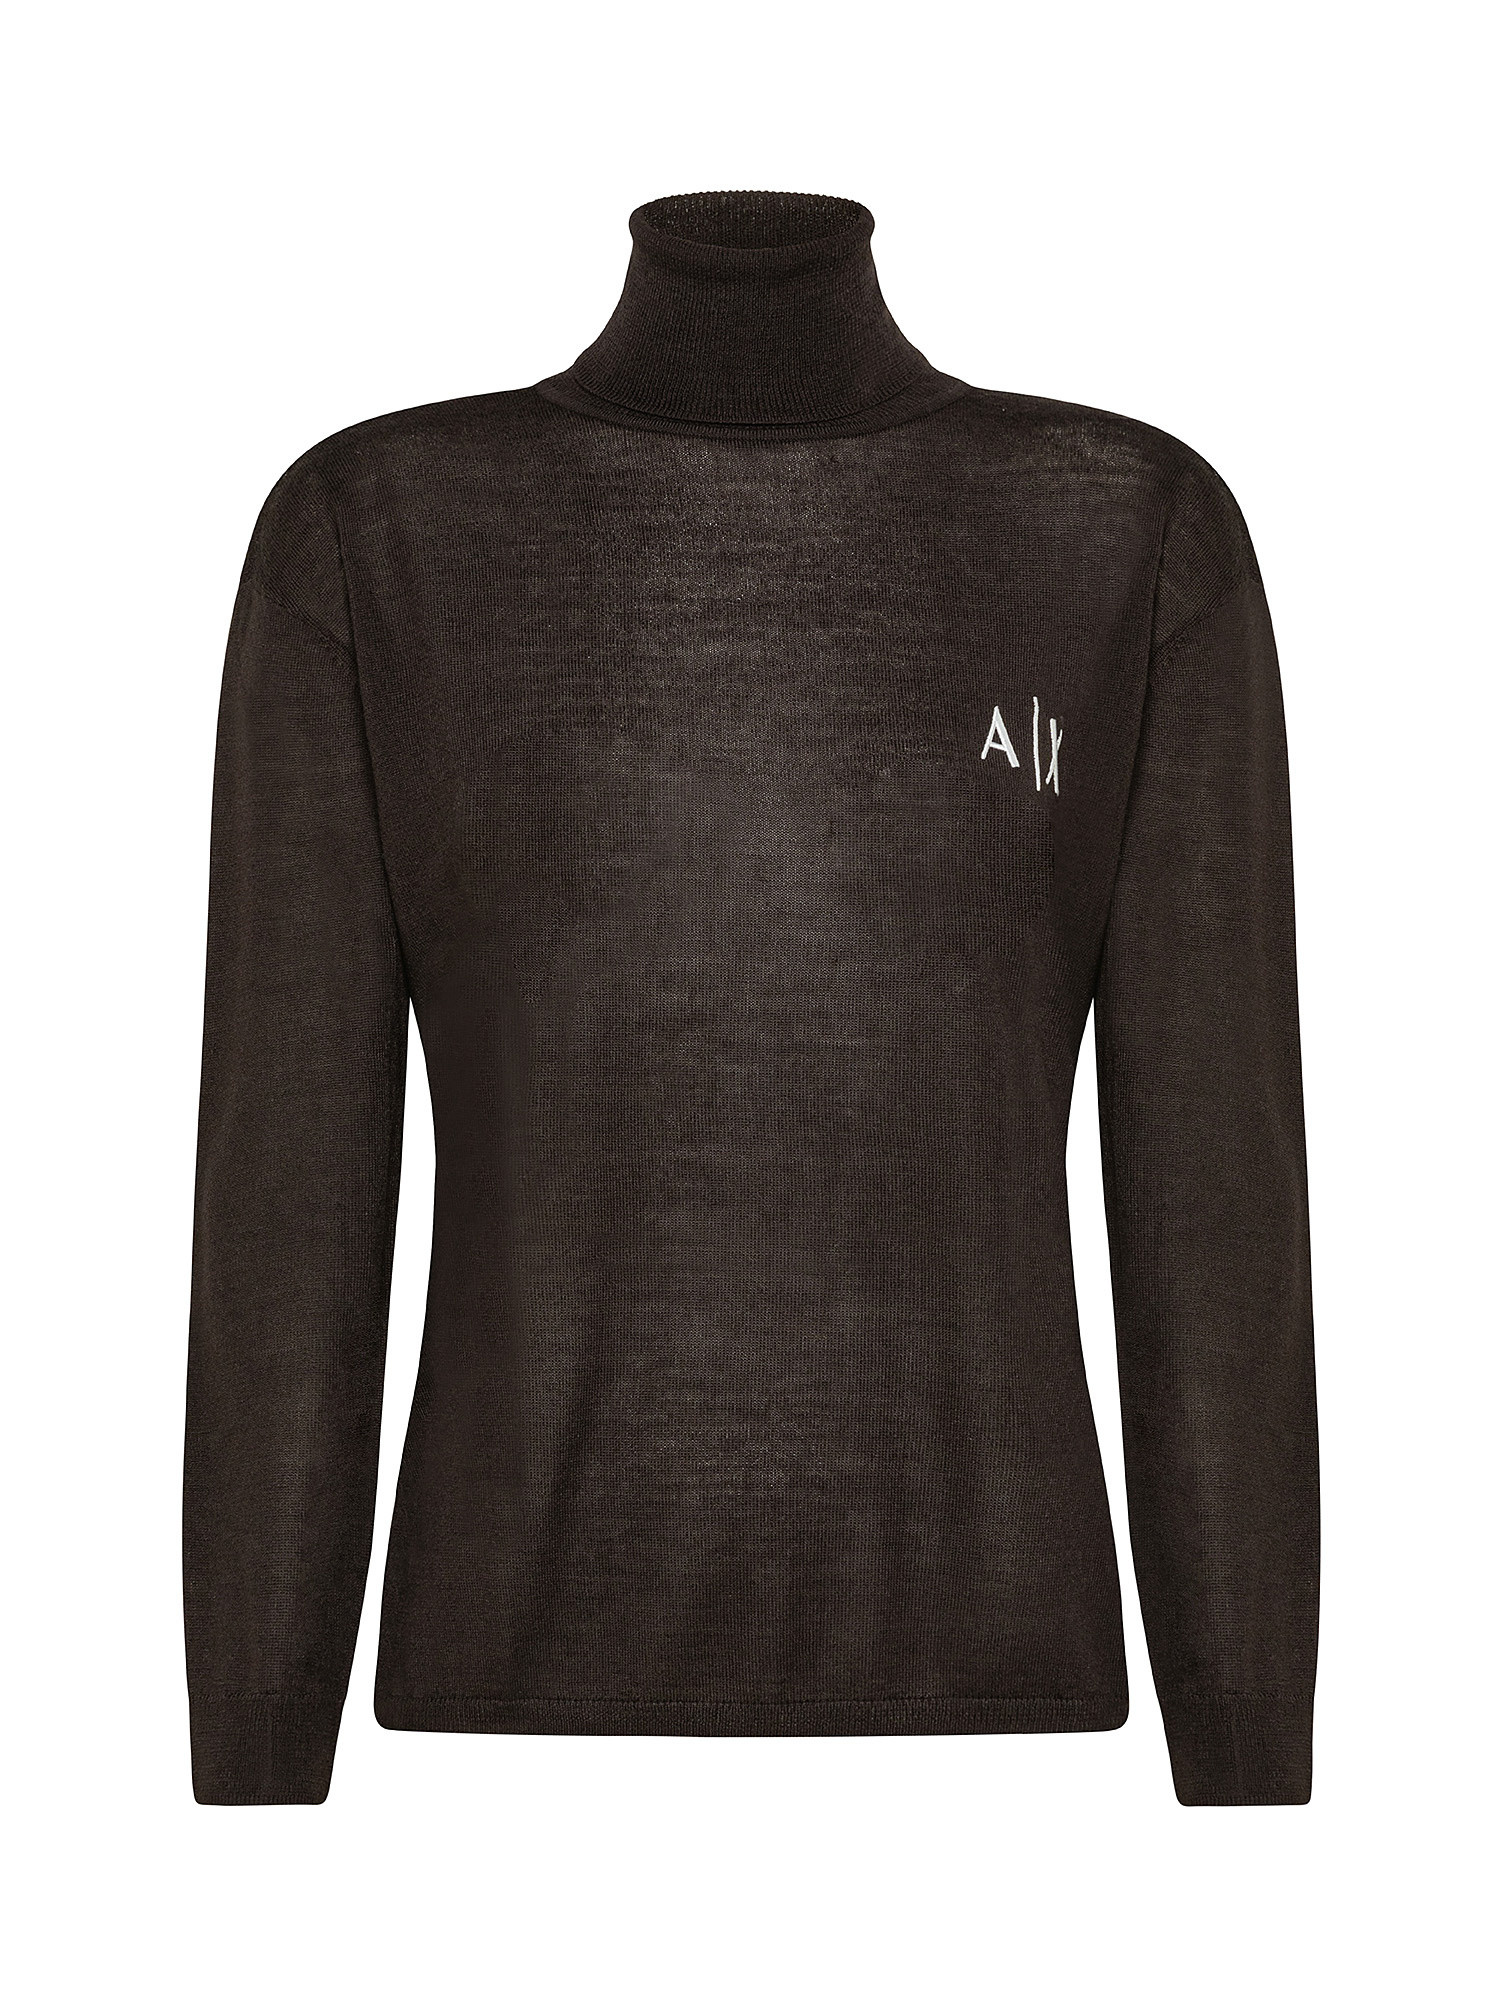 Turtleneck sweater with logo, Dark Brown, large image number 0